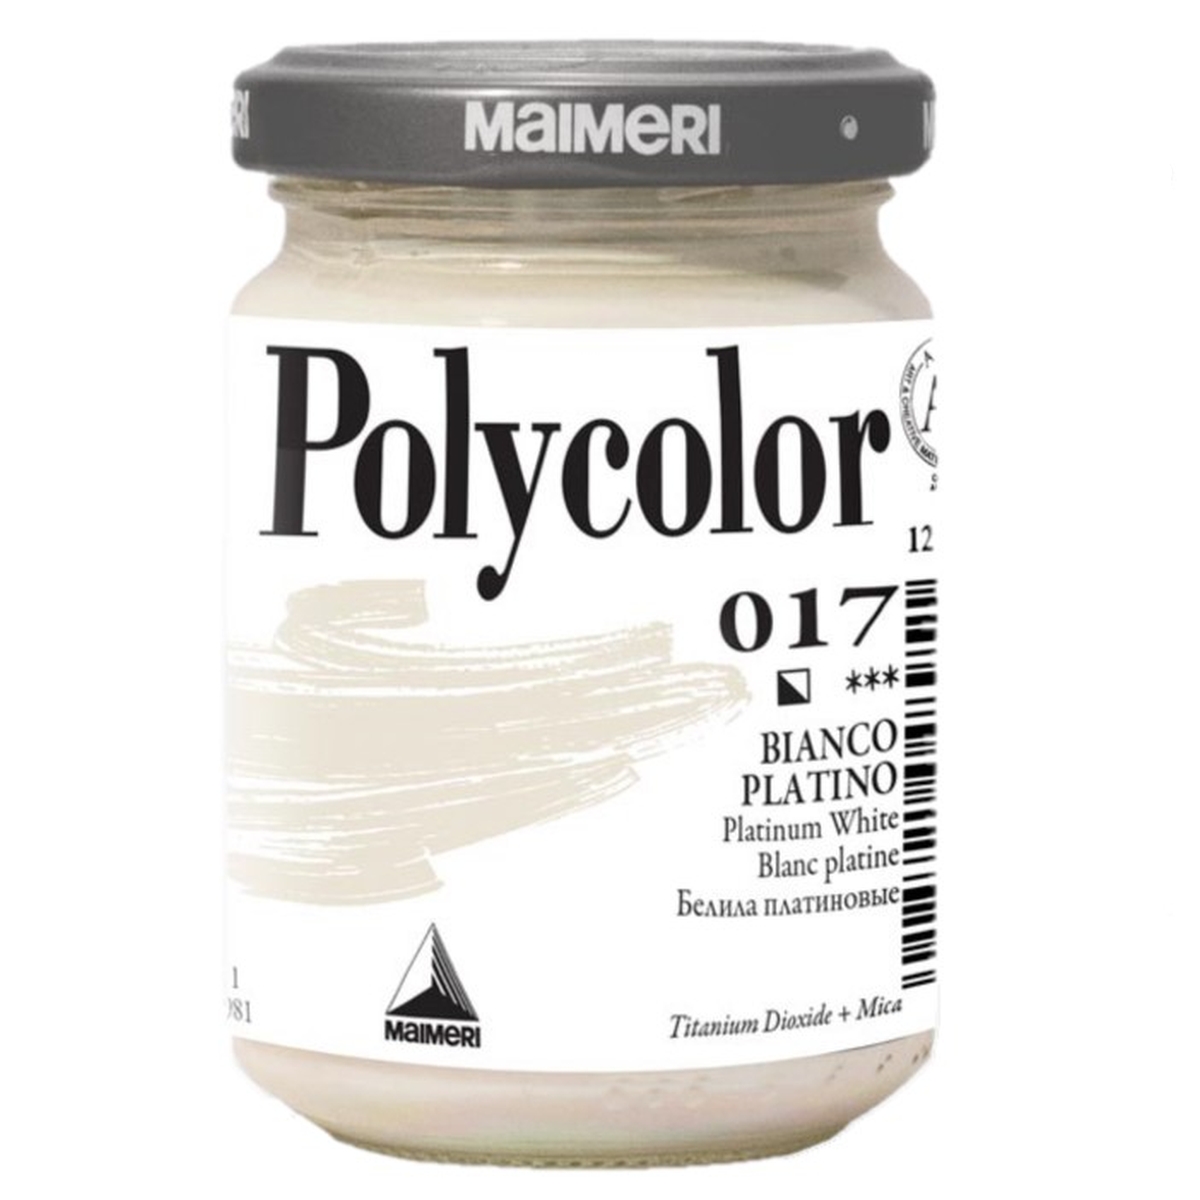 Acrilic Polycolor alb platina 140ml Maimeri 017